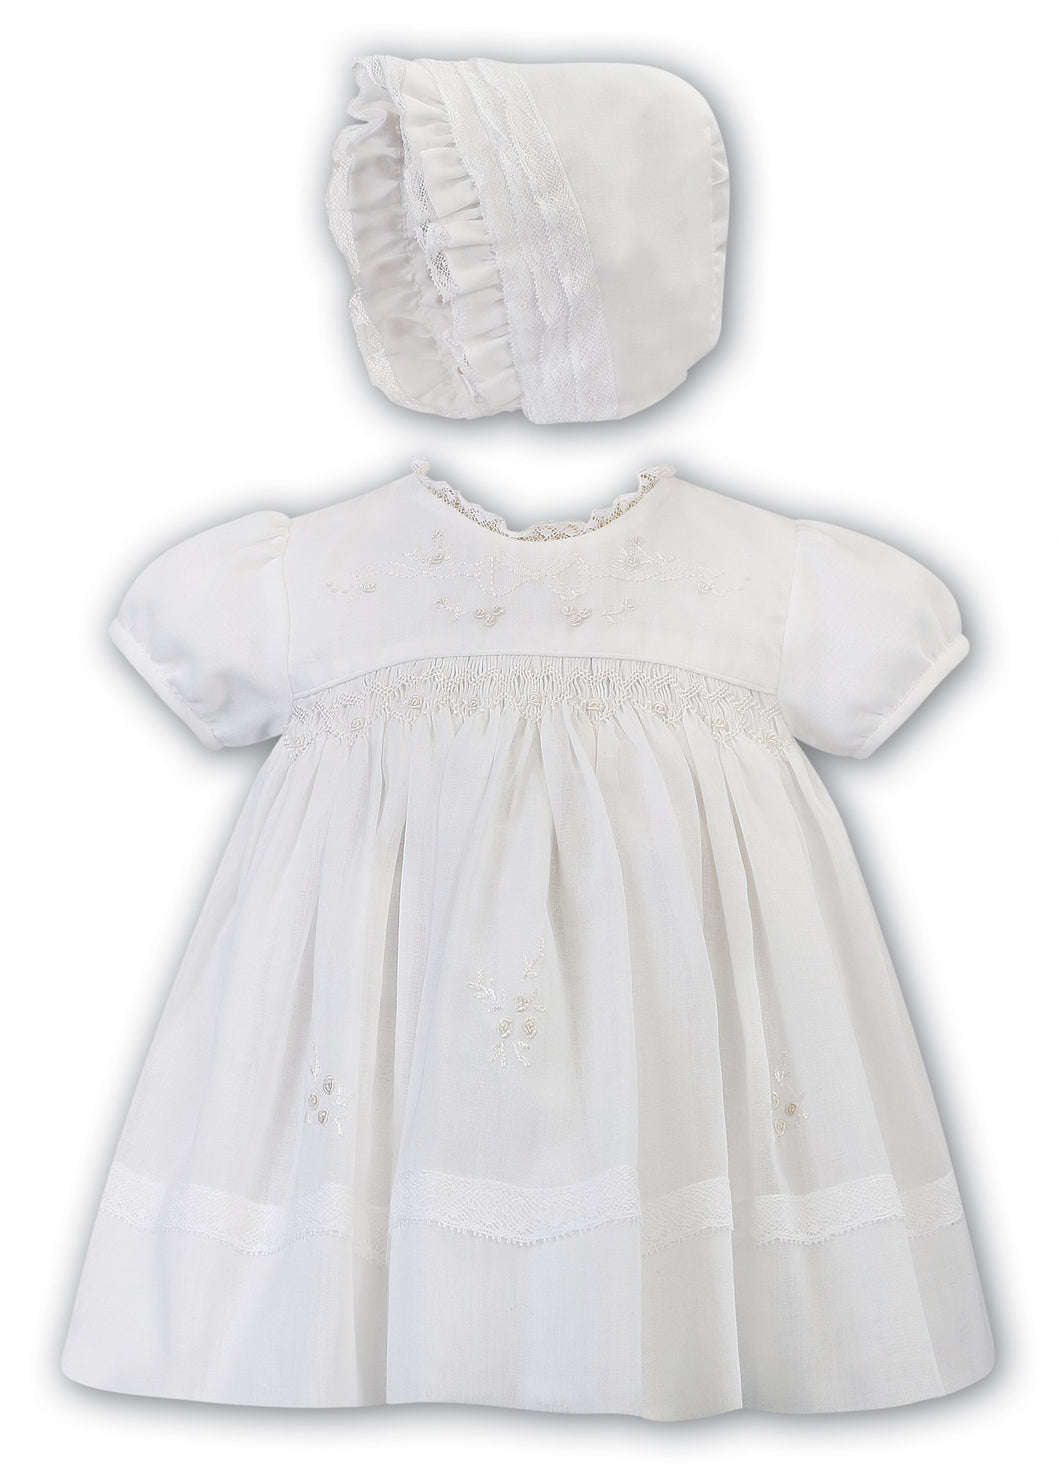 Sarah Louise Ivory baby dress & bonnet